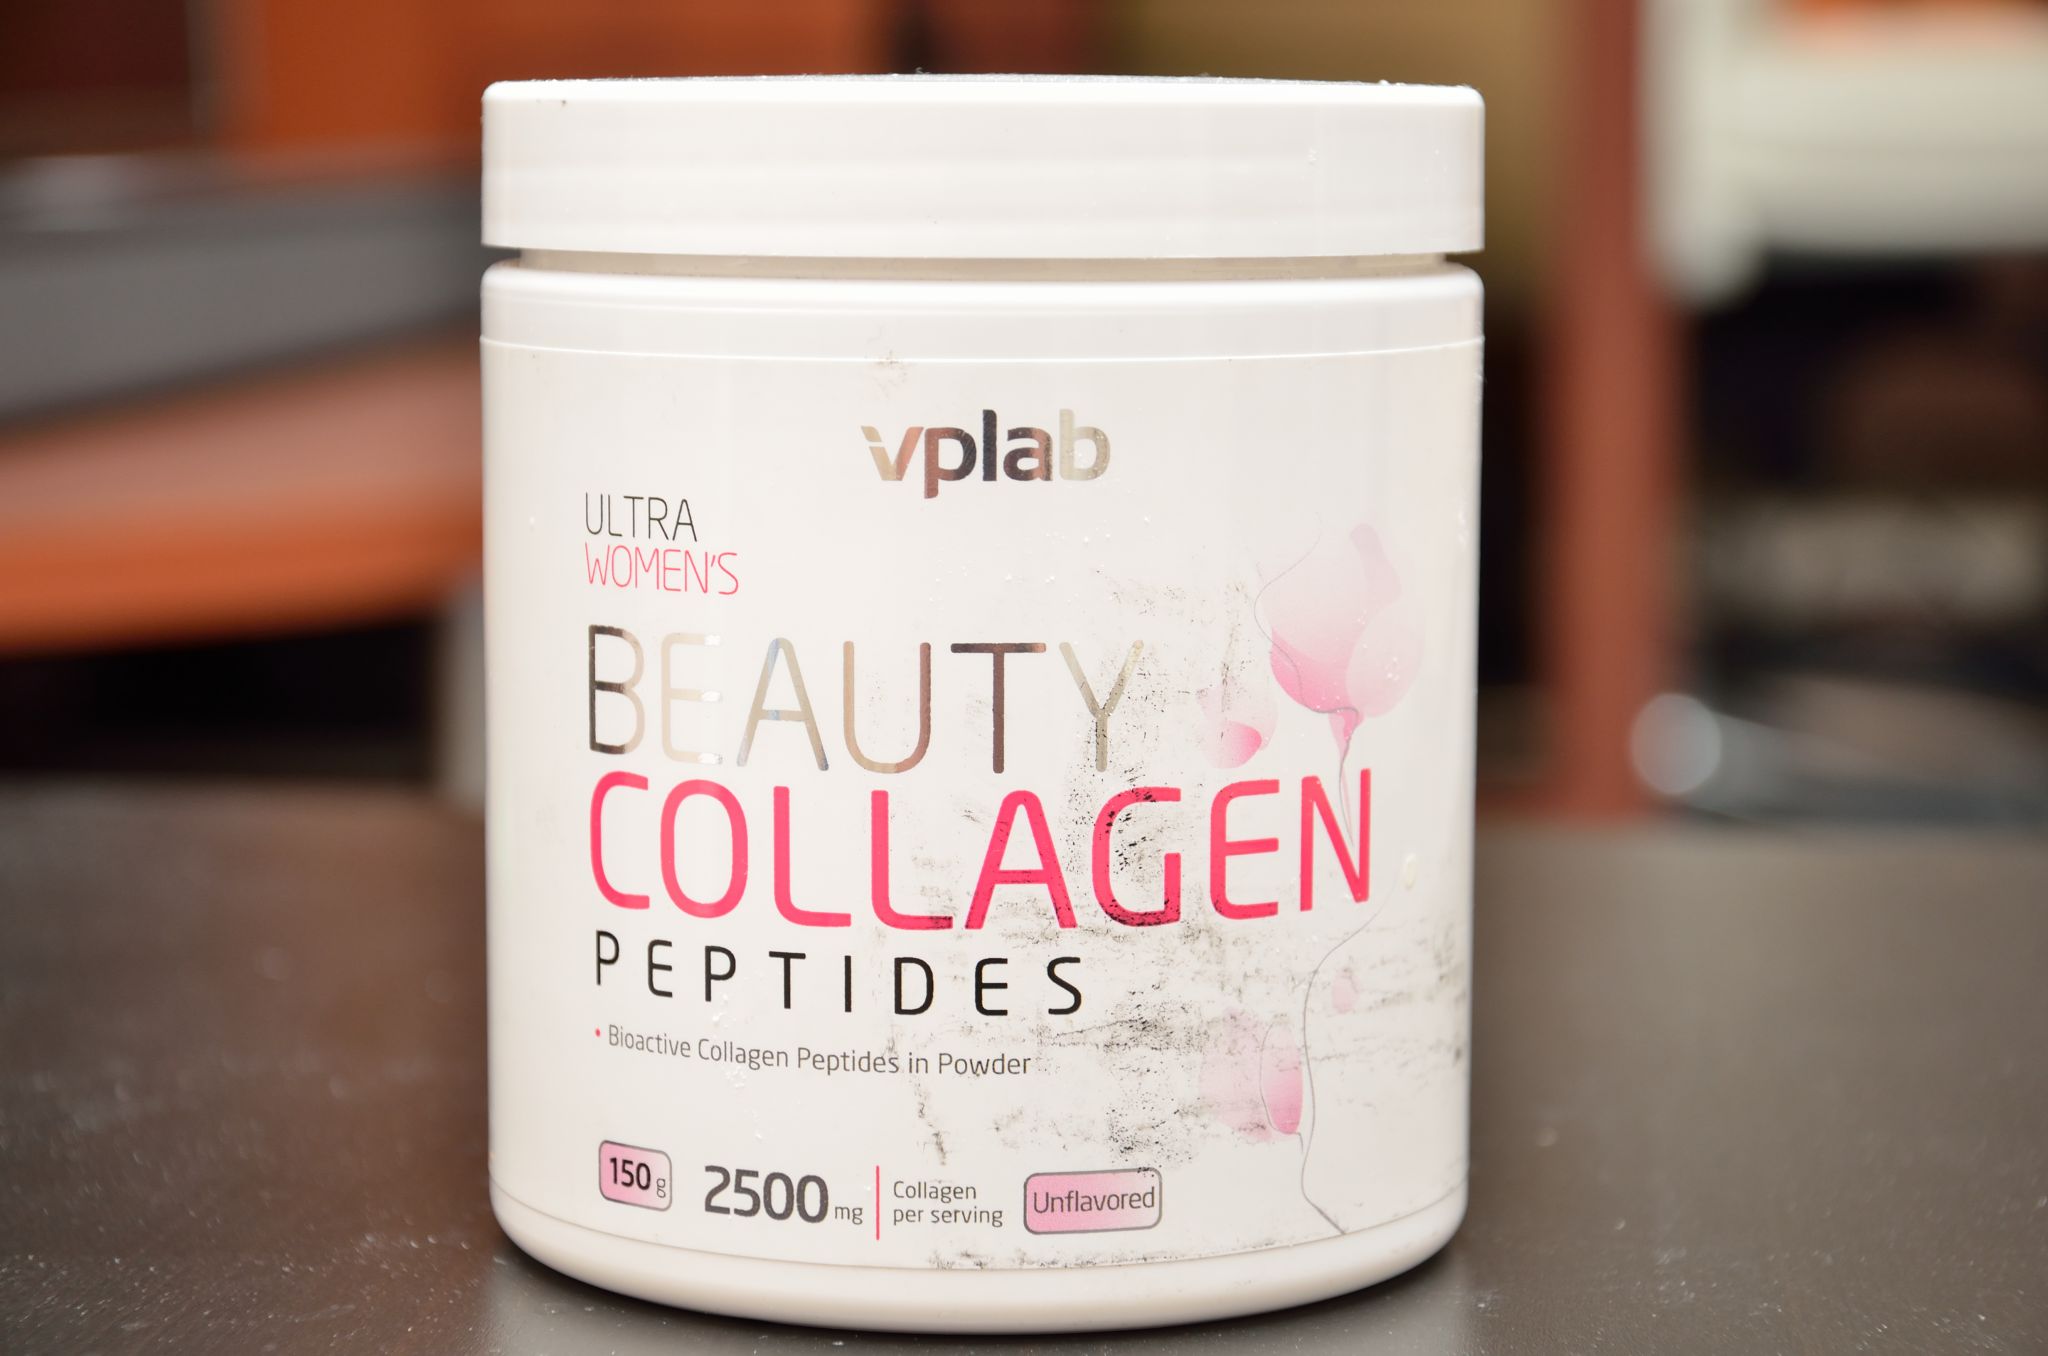 Пептид коллагена цена. ВПЛАБ Бьюти коллаген пептид 150г. Бьюти коллаген пептид VPLAB. Коллаген VPLAB / Beauty Collagen Peptides / 150 g. Коллаген VPLAB Collagen Peptides.